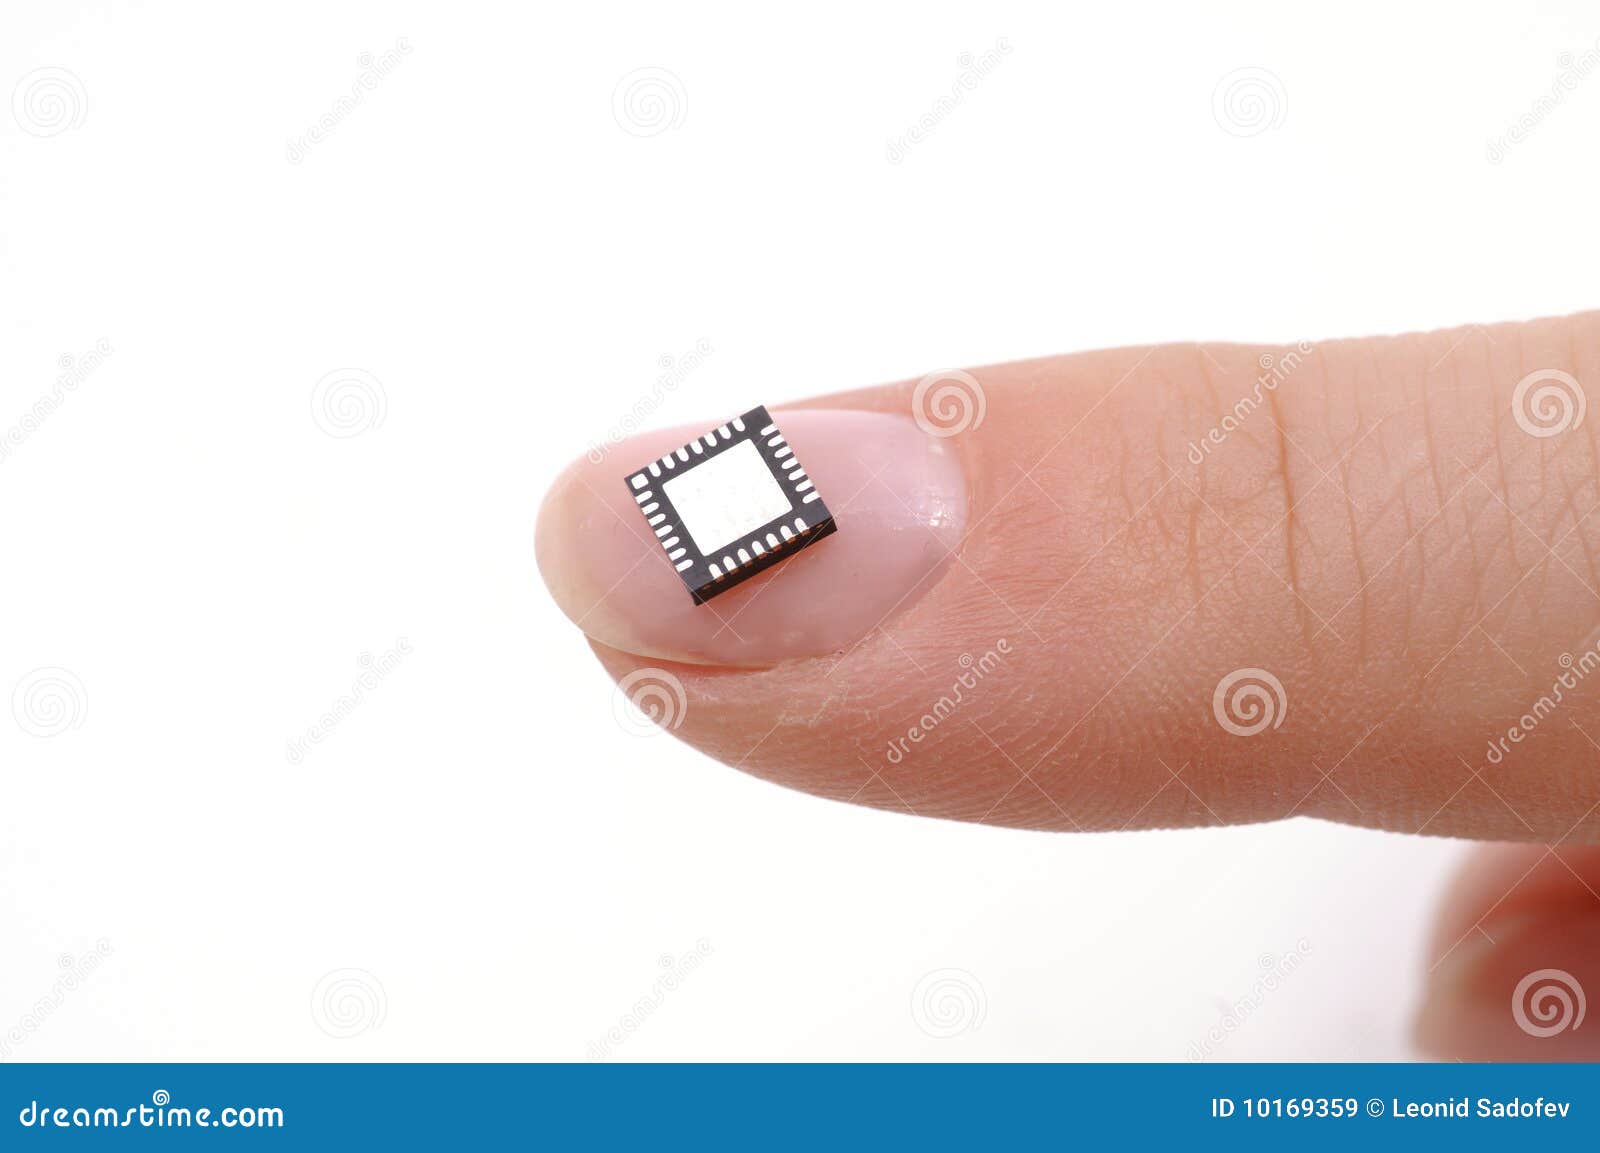 microprocessor on girls fingertip